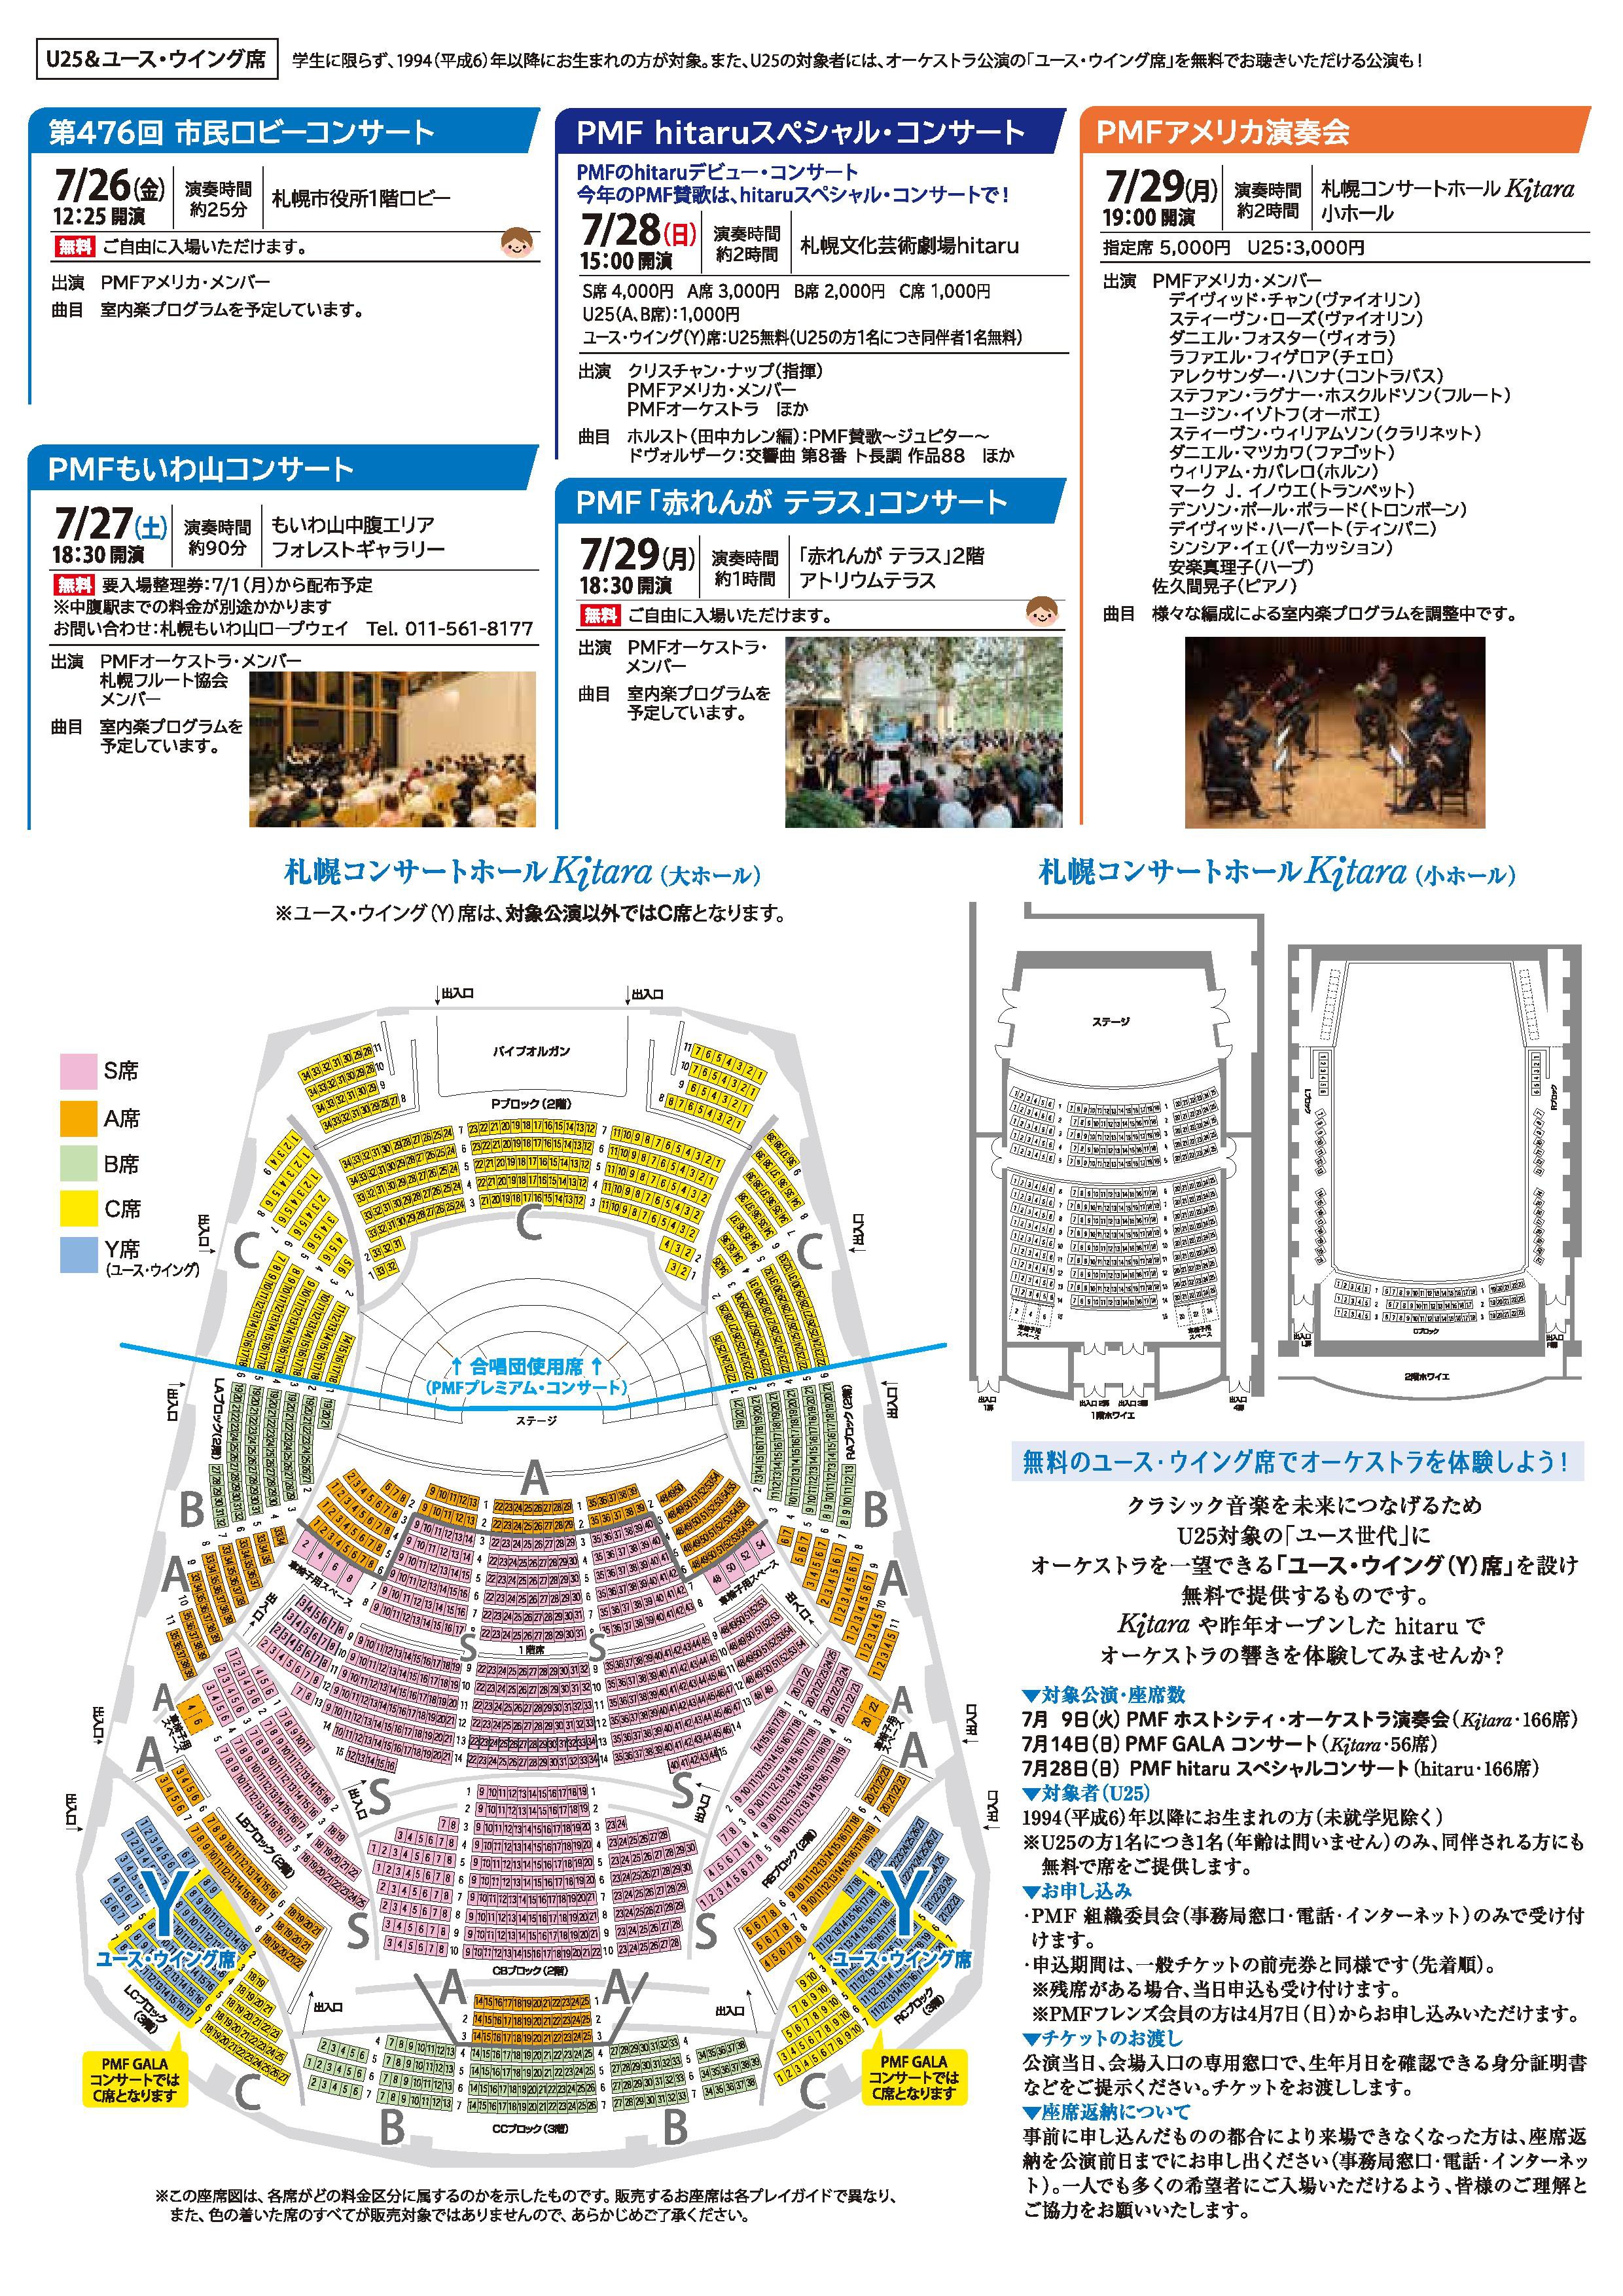 PMF 2019 Concert Schedule *Japanese (3)